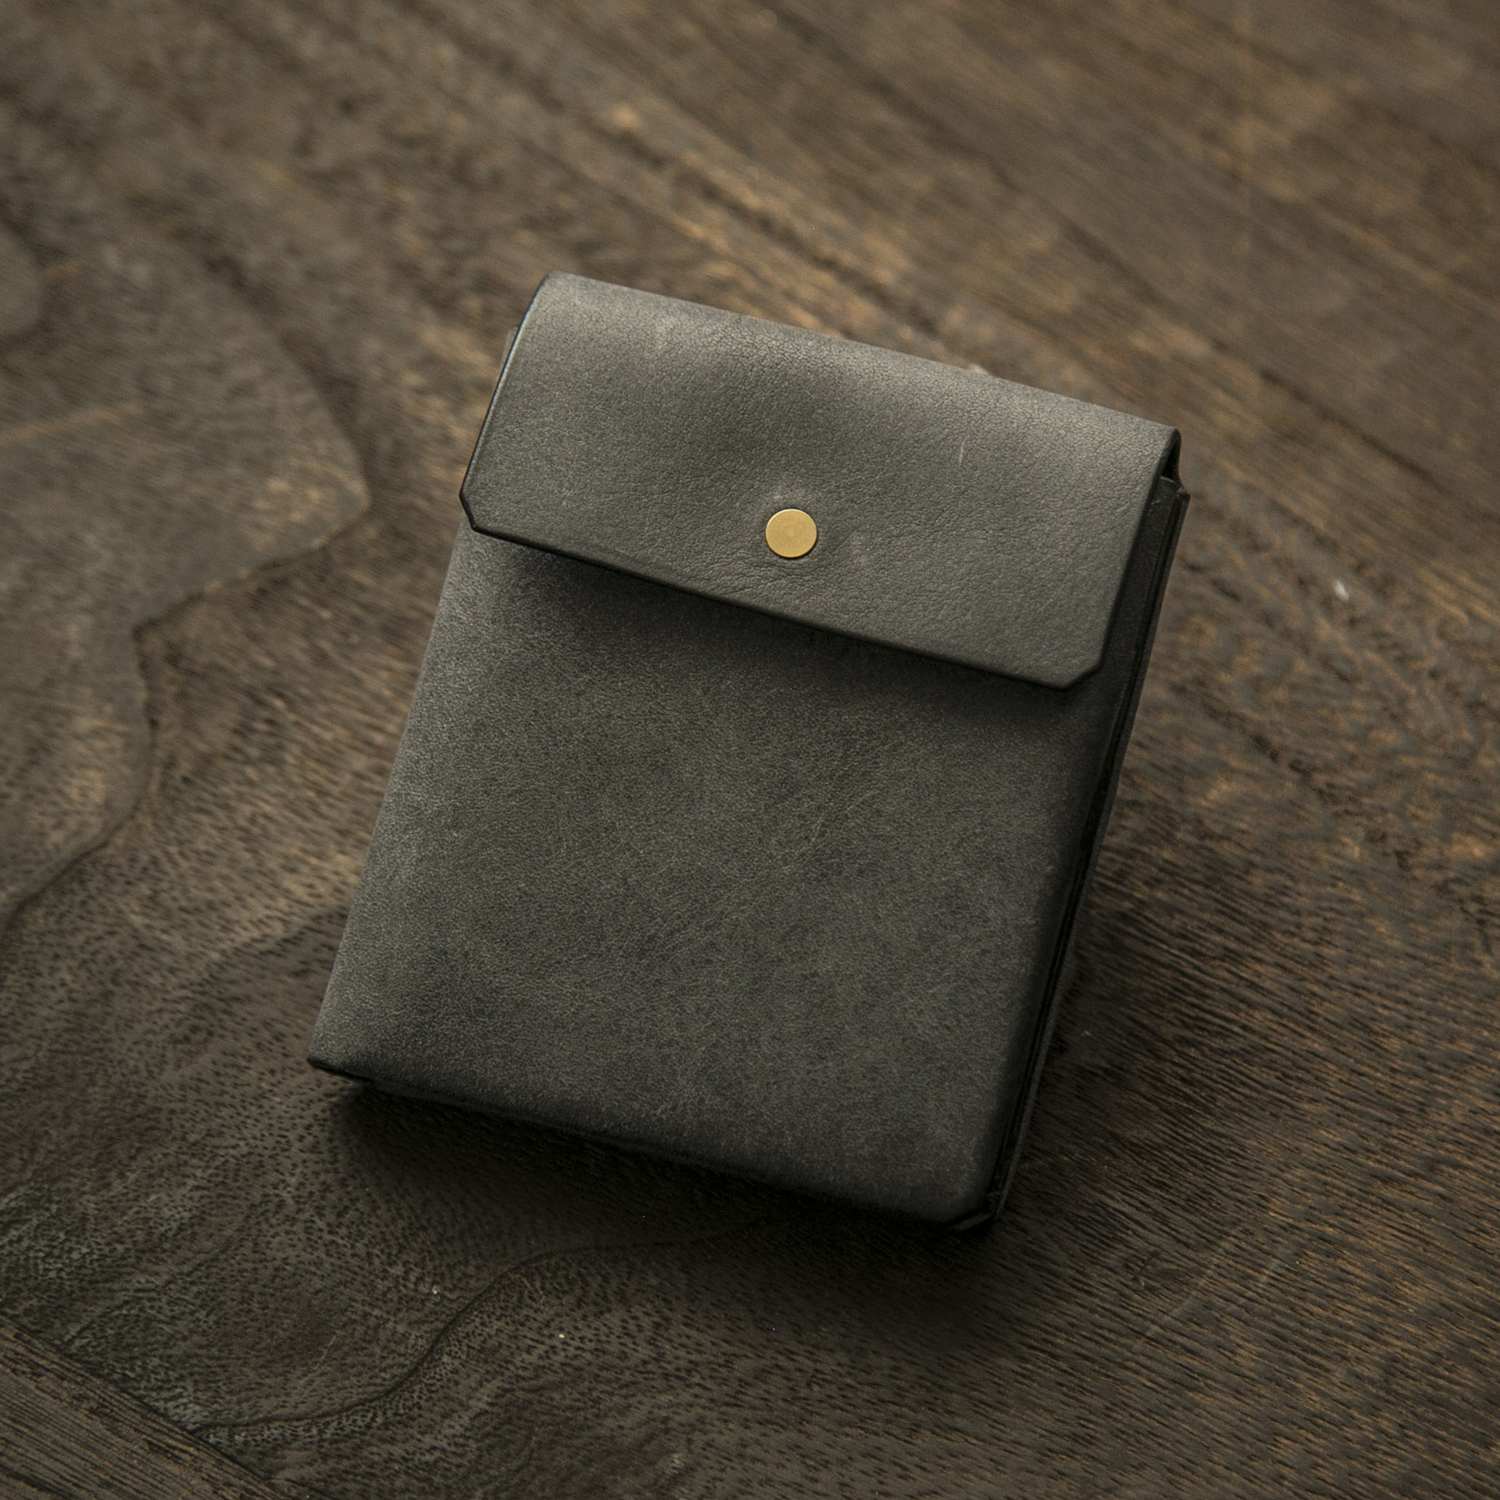 SAFUJI/ミニ折り財布 -二つ折り財布の最小サイズを極めた スタイルストア